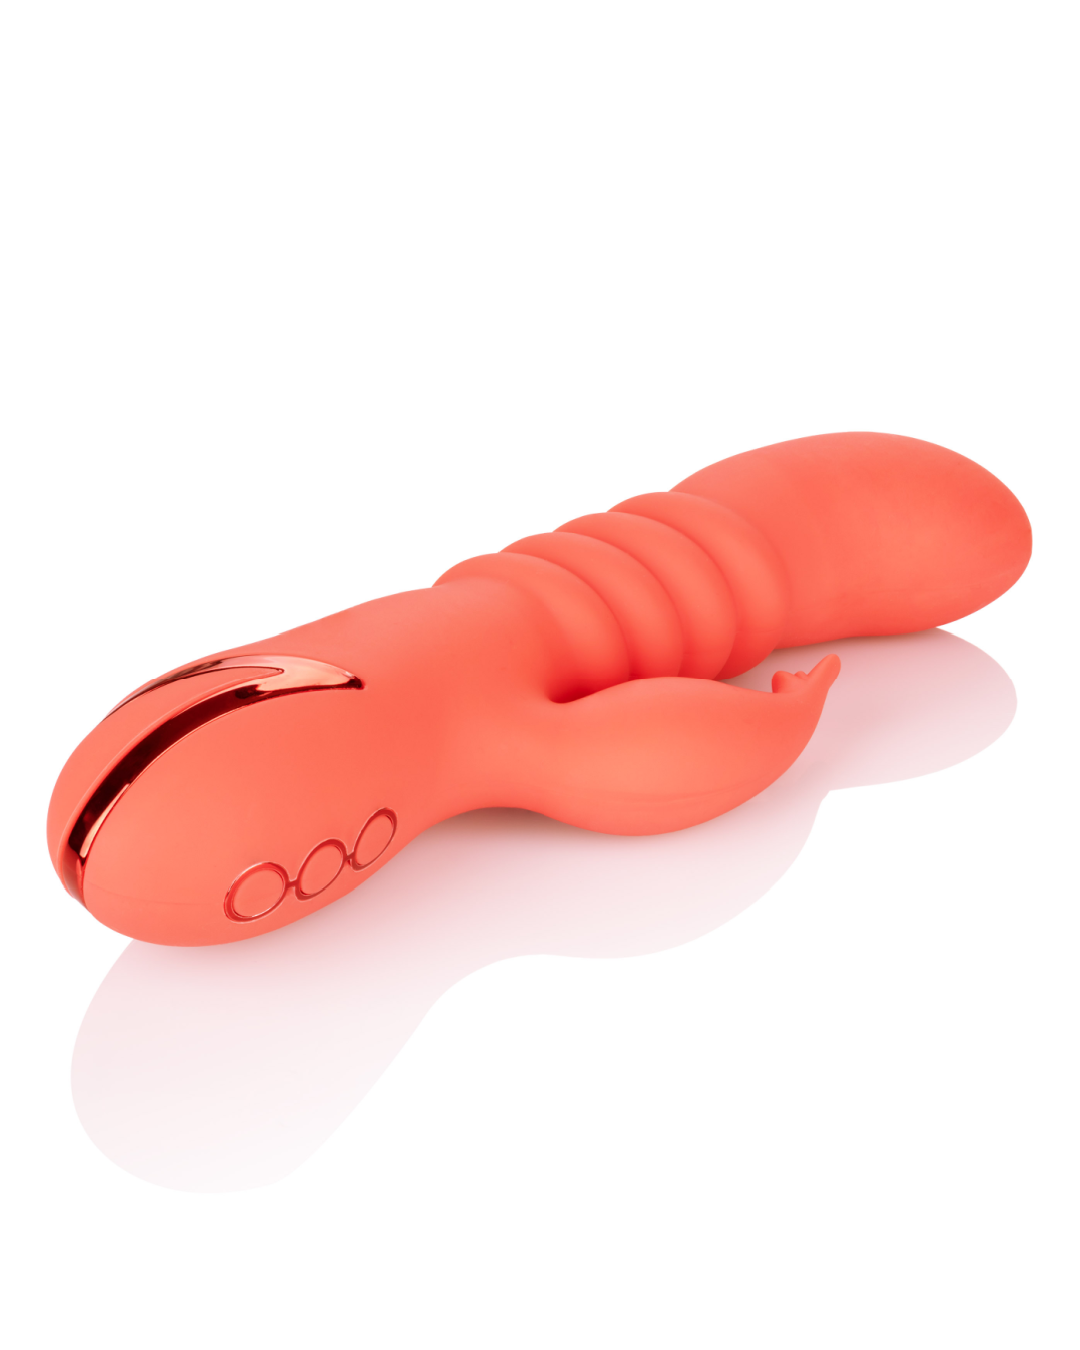 California Dreaming Orange County Cutie Thrusting Rabbit Vibrator - Orange